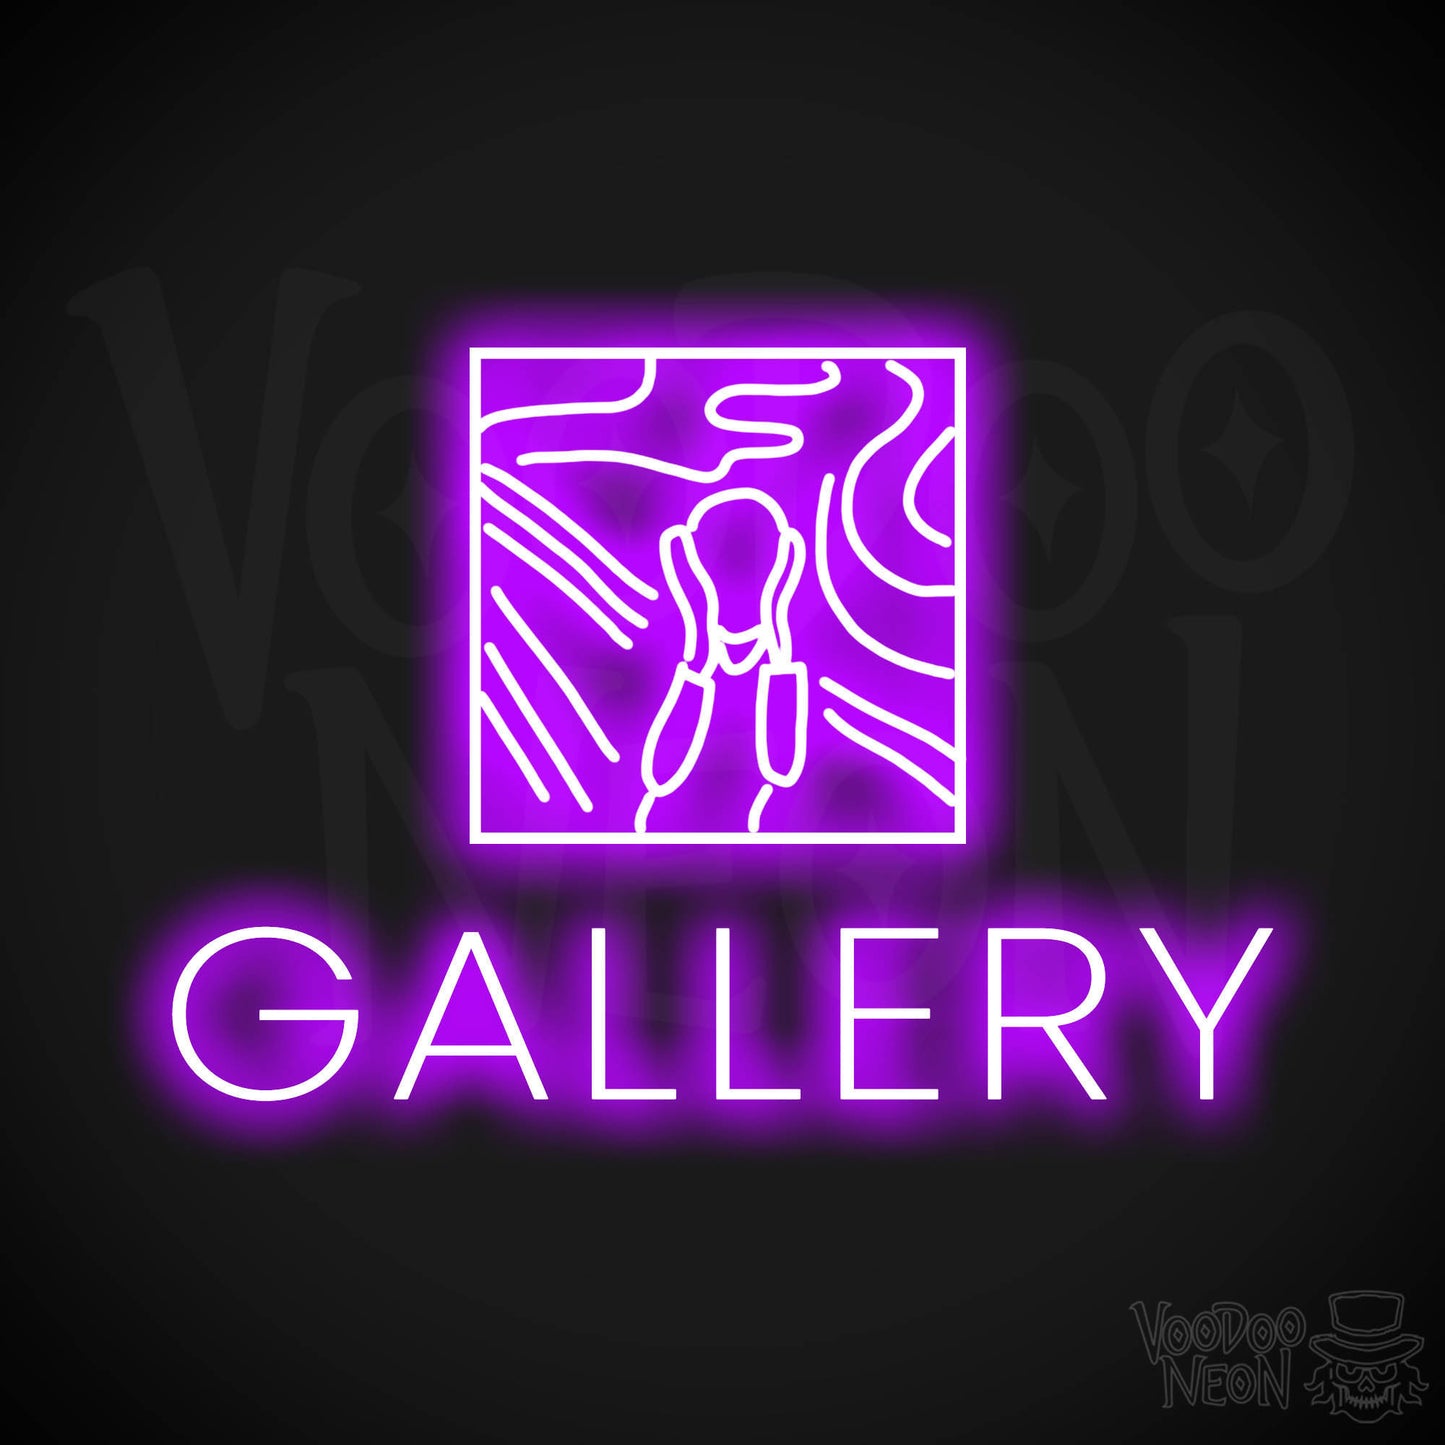 Gallery LED Neon - Purple